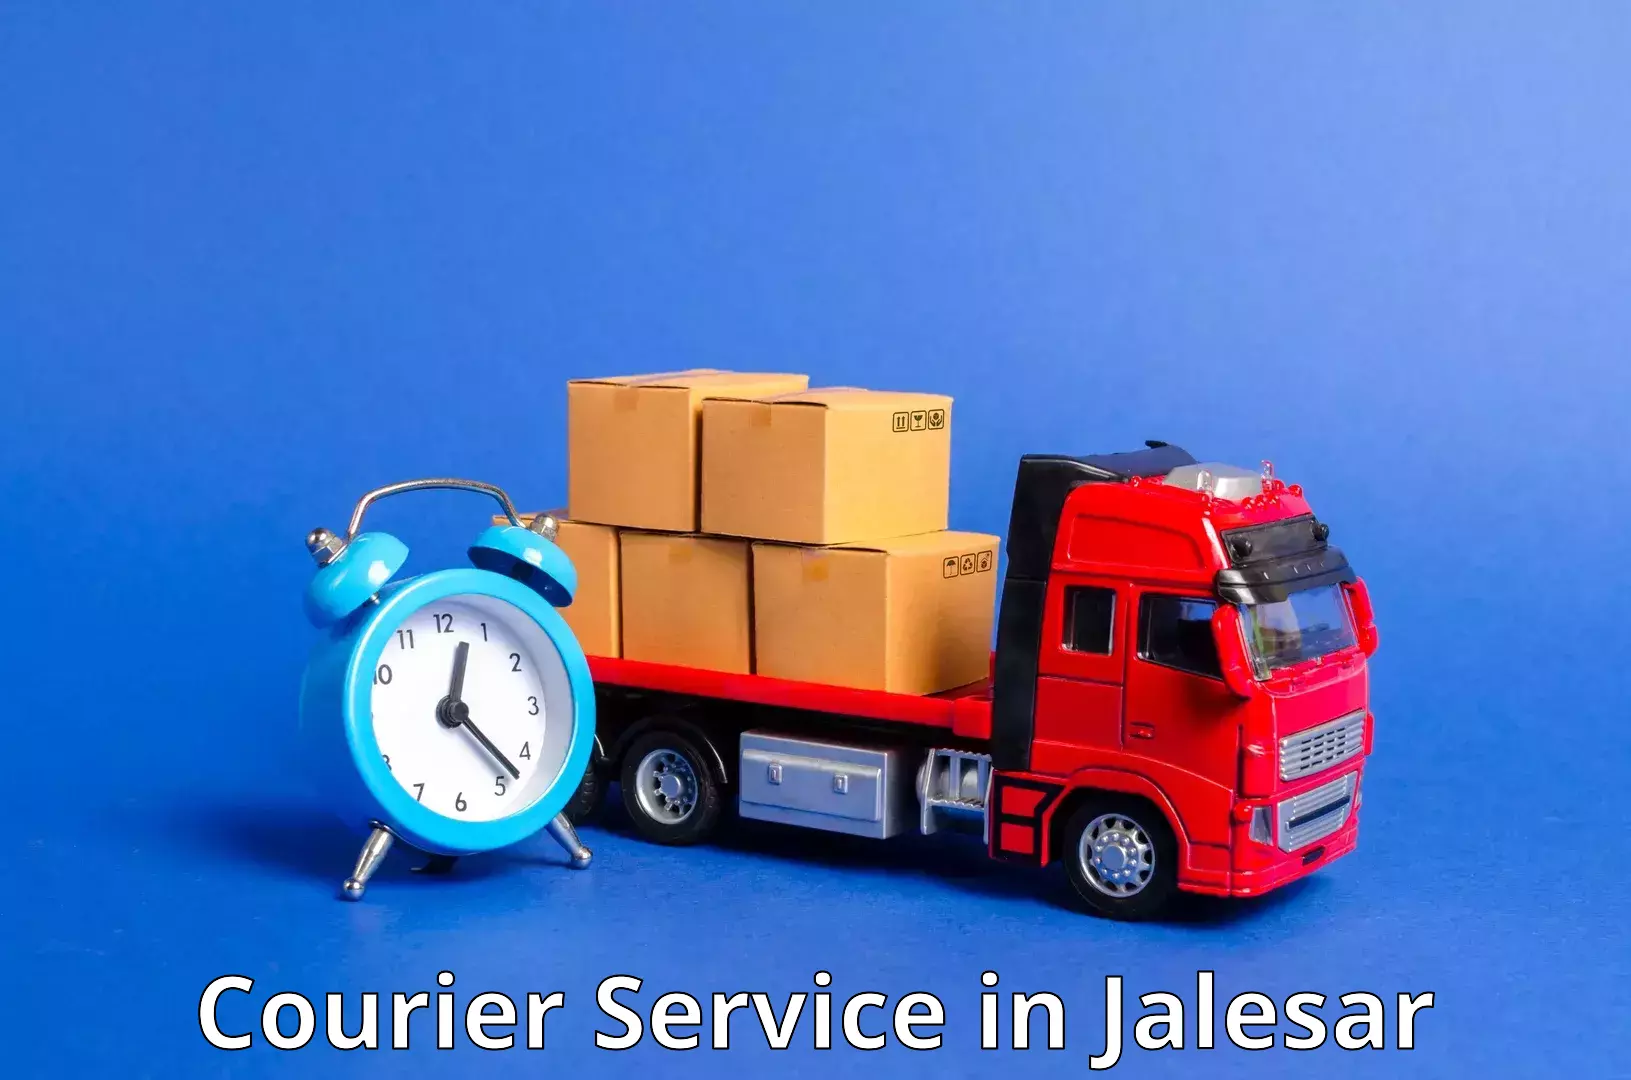 Flexible delivery scheduling in Jalesar